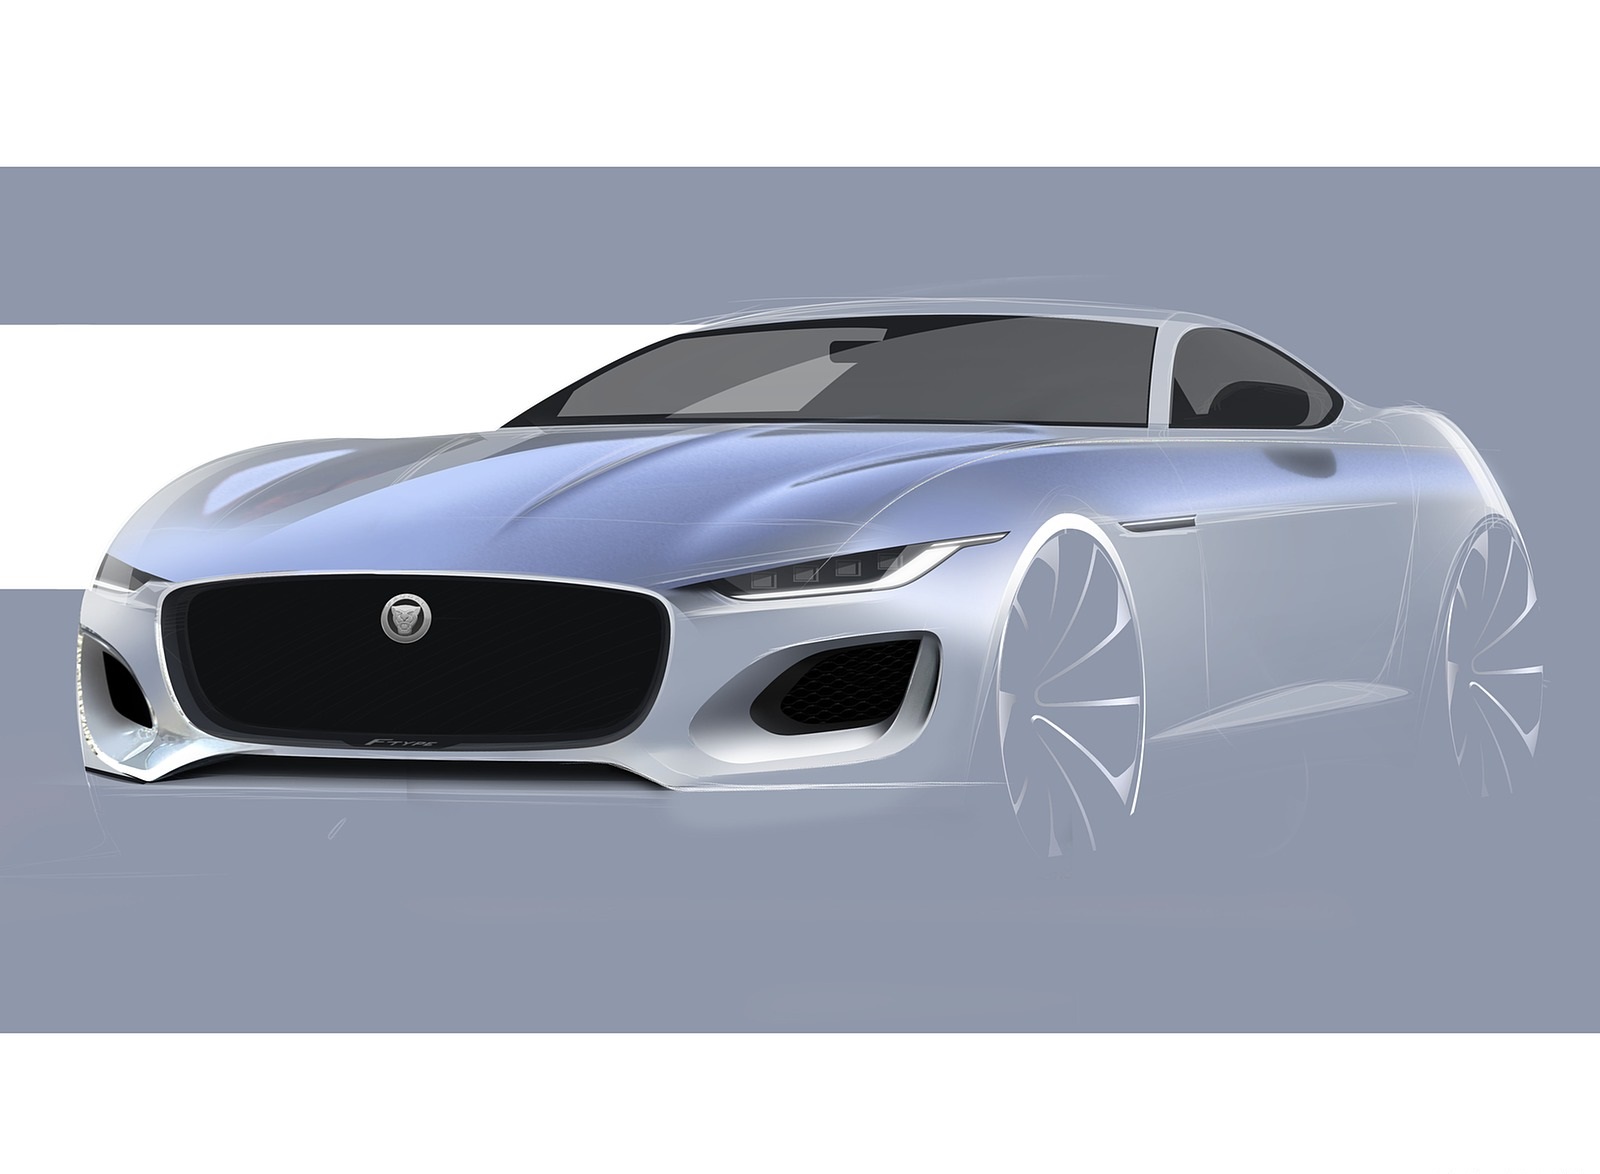 2021 Jaguar F-TYPE Design Sketch Wallpapers #139 of 143